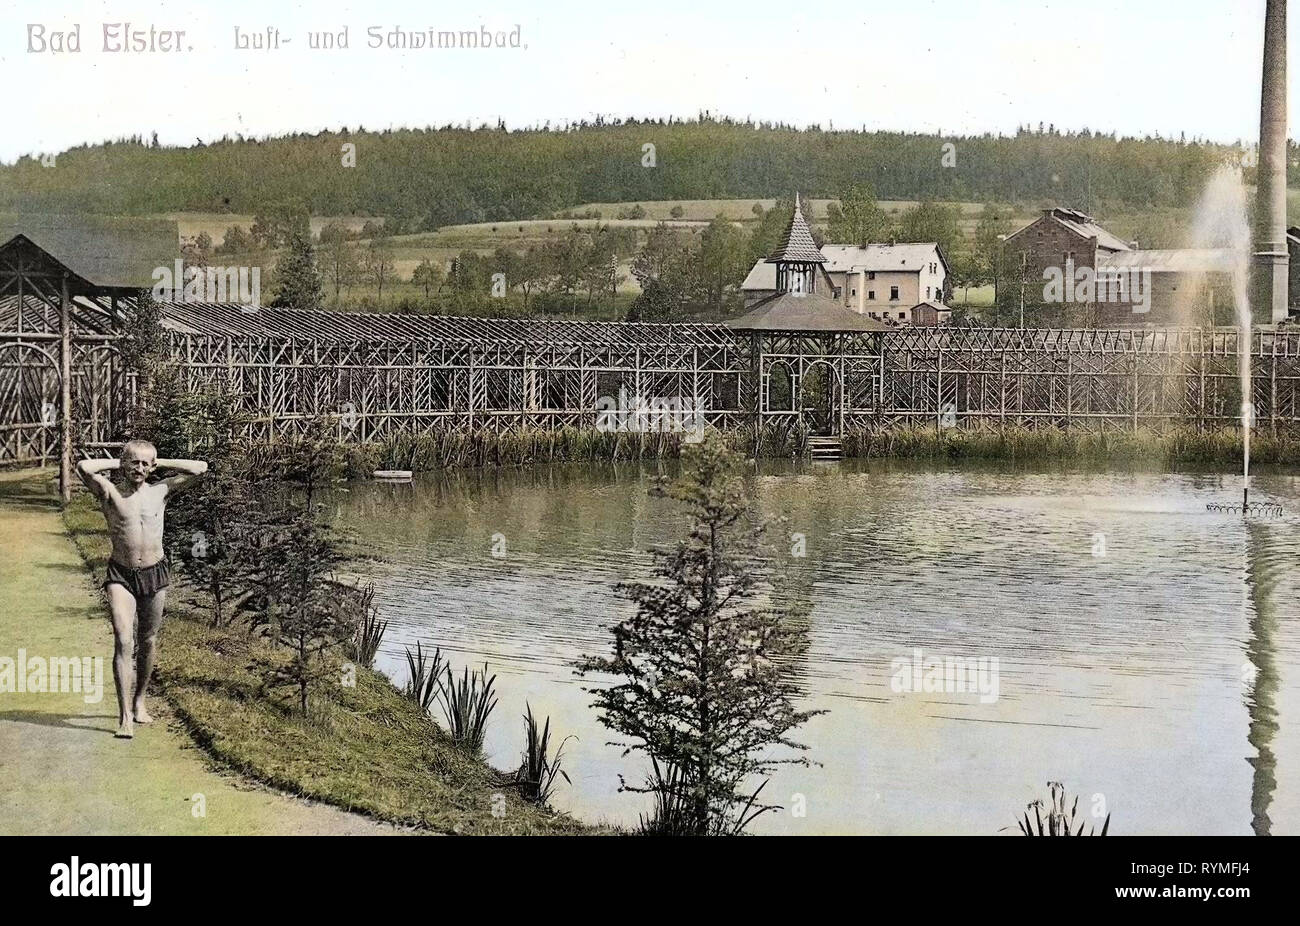 Baths in Saxony, Fountains in Bad Elster, Bad Elster (Gondelteich), 1907, Vogtlandkreis, Bad Elster, Luft & Schwimmbad, Germany Stock Photo